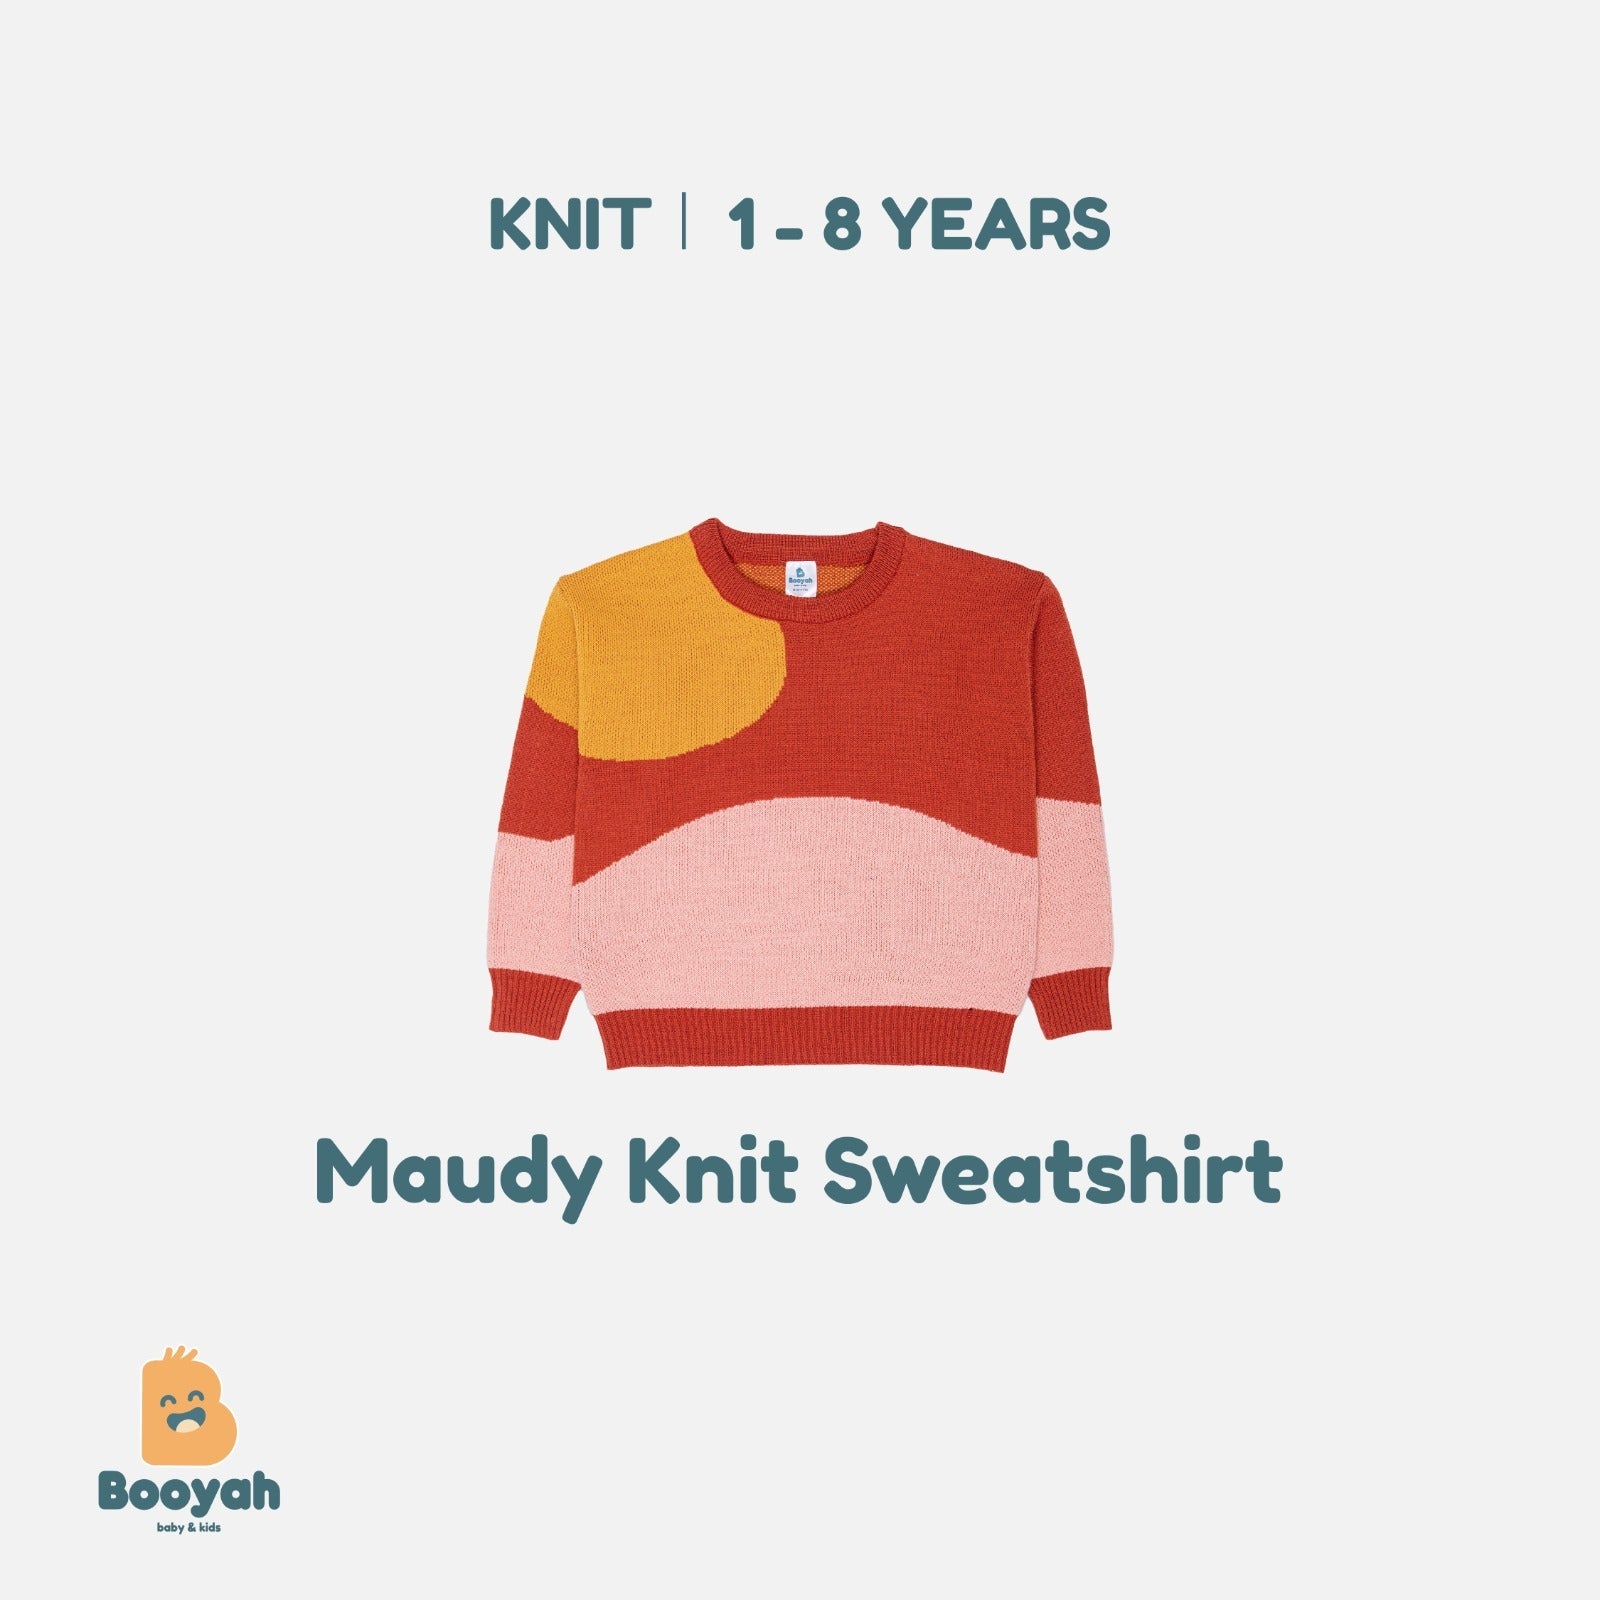 Booyah Baby & Kids Maudy Knit Sweatshirt